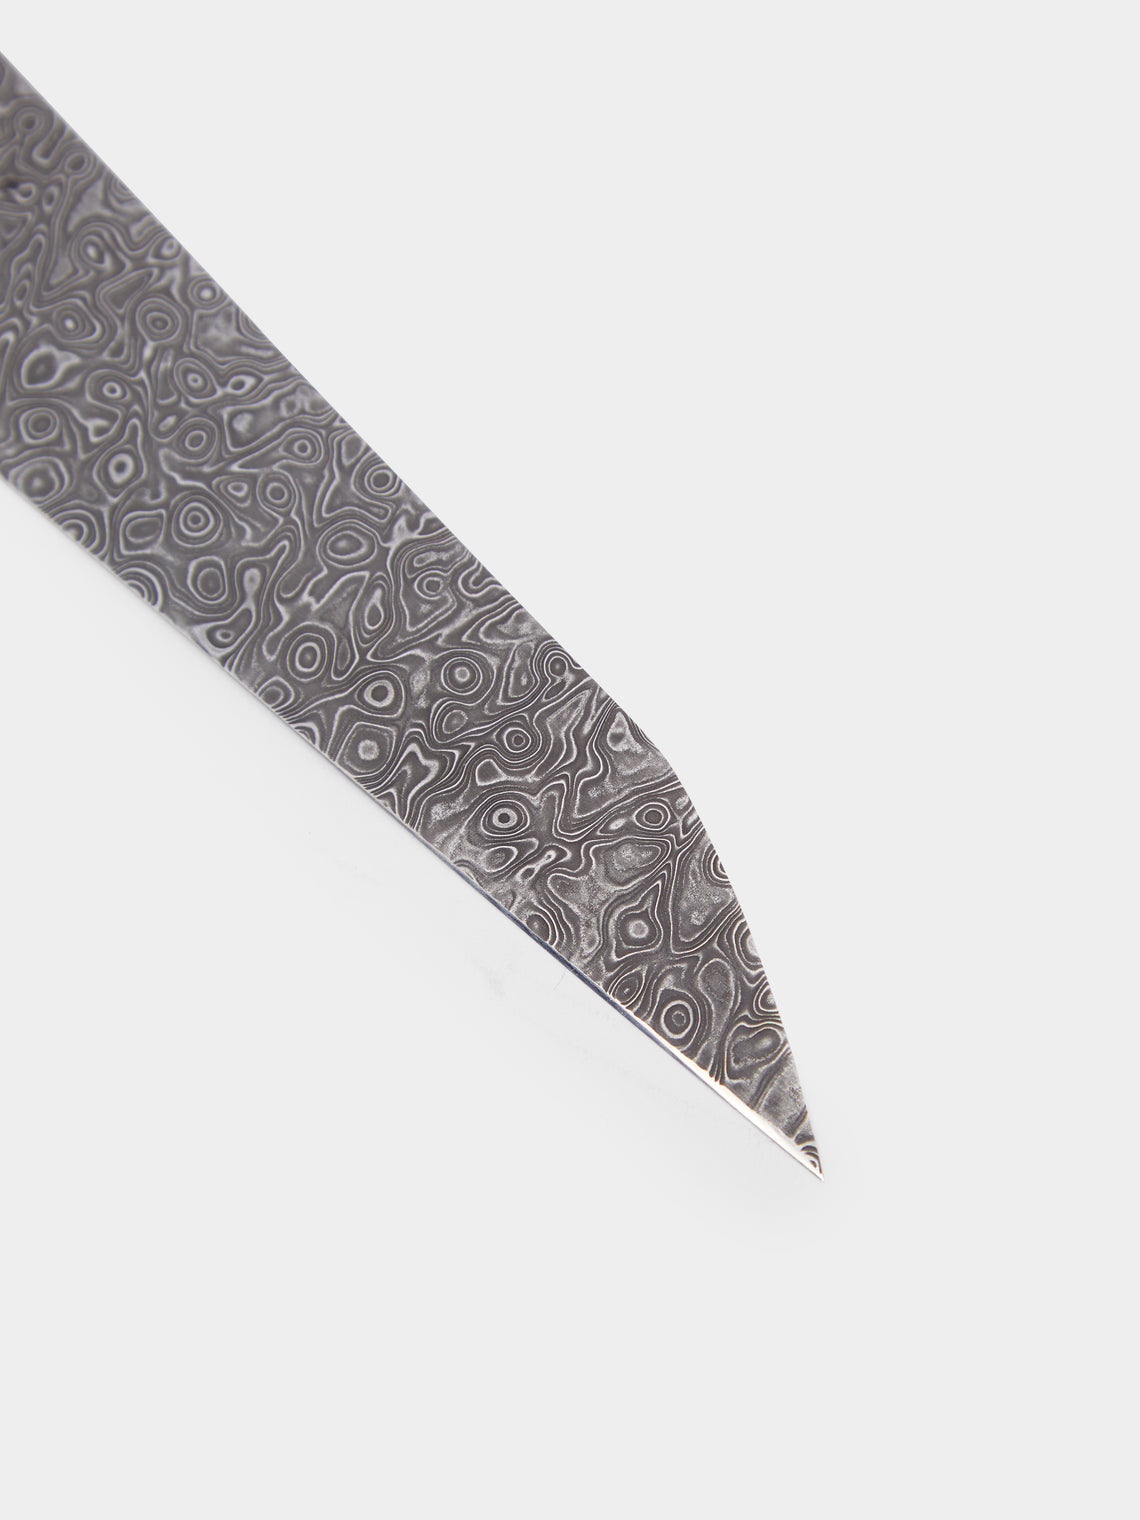 Bodman Blades - Hand-Forged Chestnut Burl and Damascus Steel K-Tipped Slicer -  - ABASK